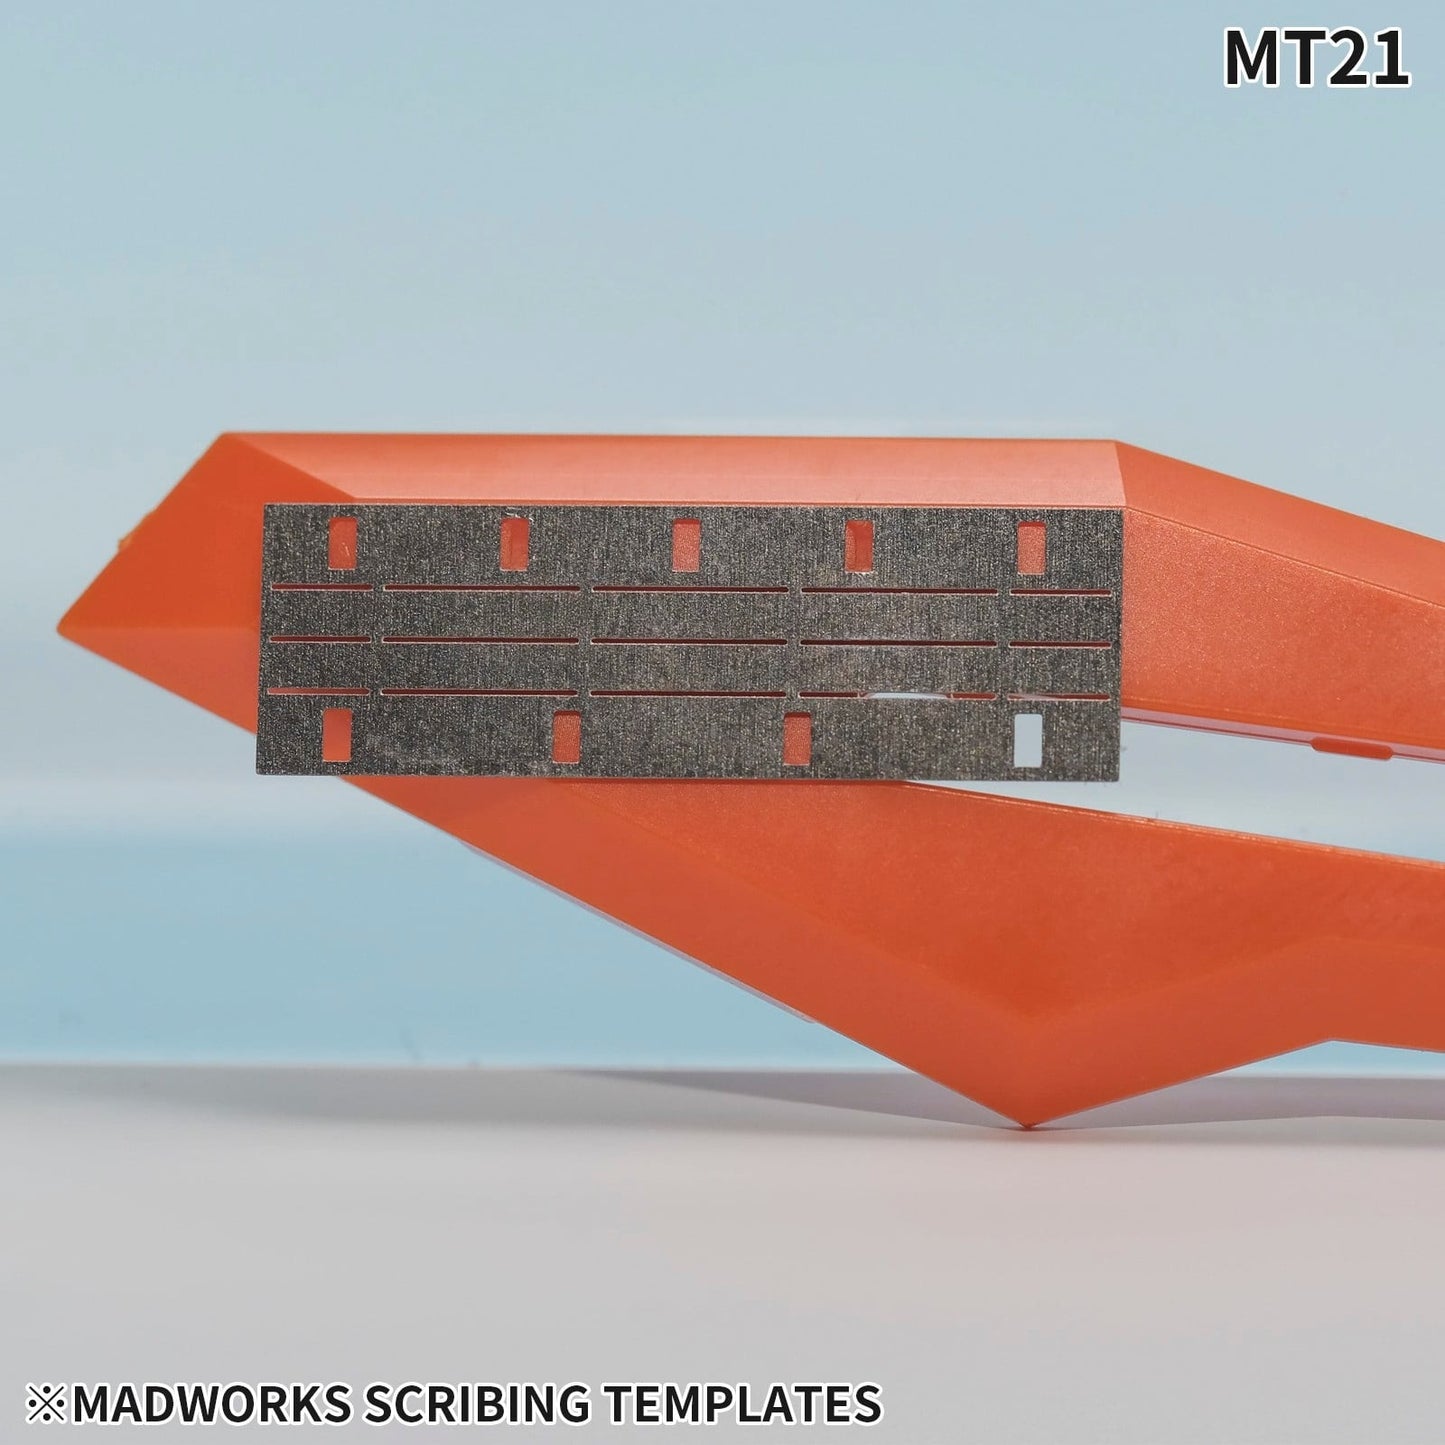 Madworks MT20 & MT21 Scribing Template